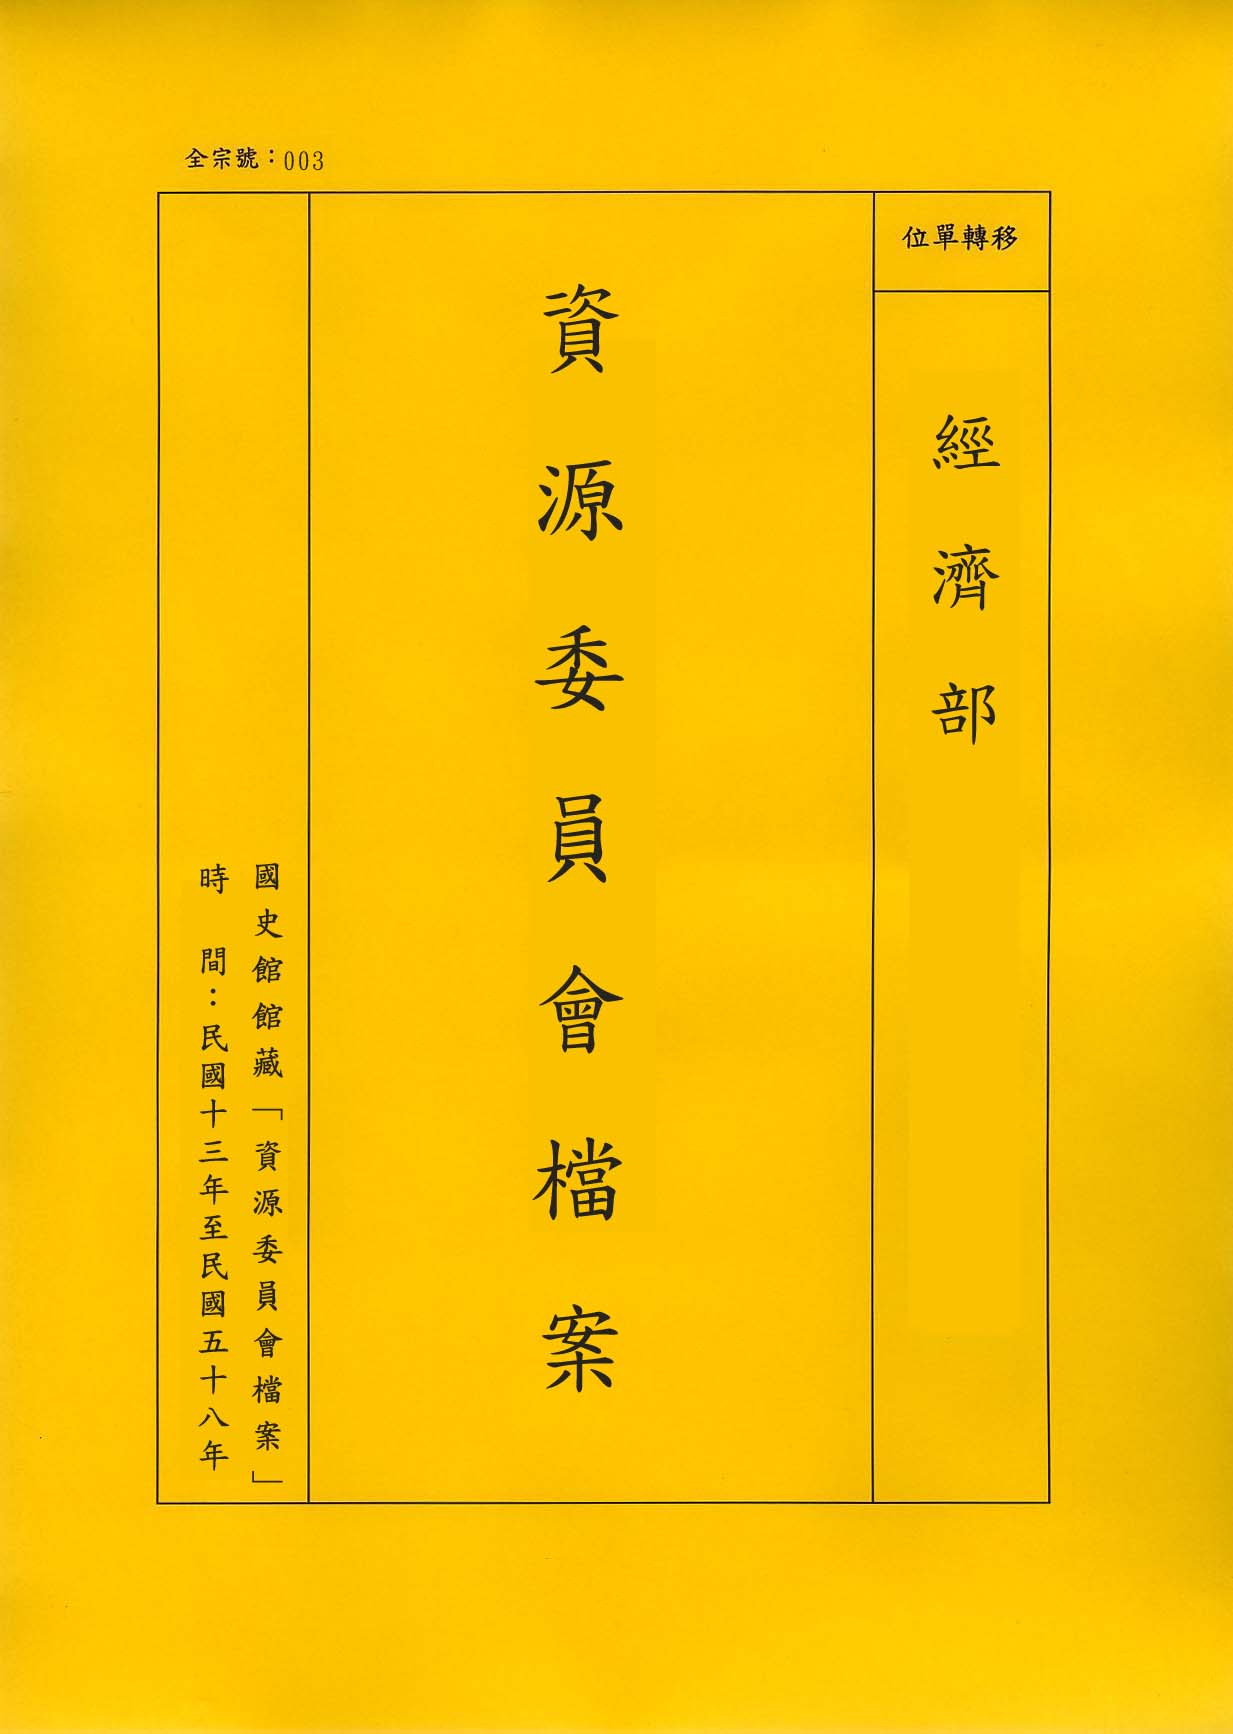 卷名:劉曾适函件Letters of Tseng-Kua Liu(003-020600-2346)